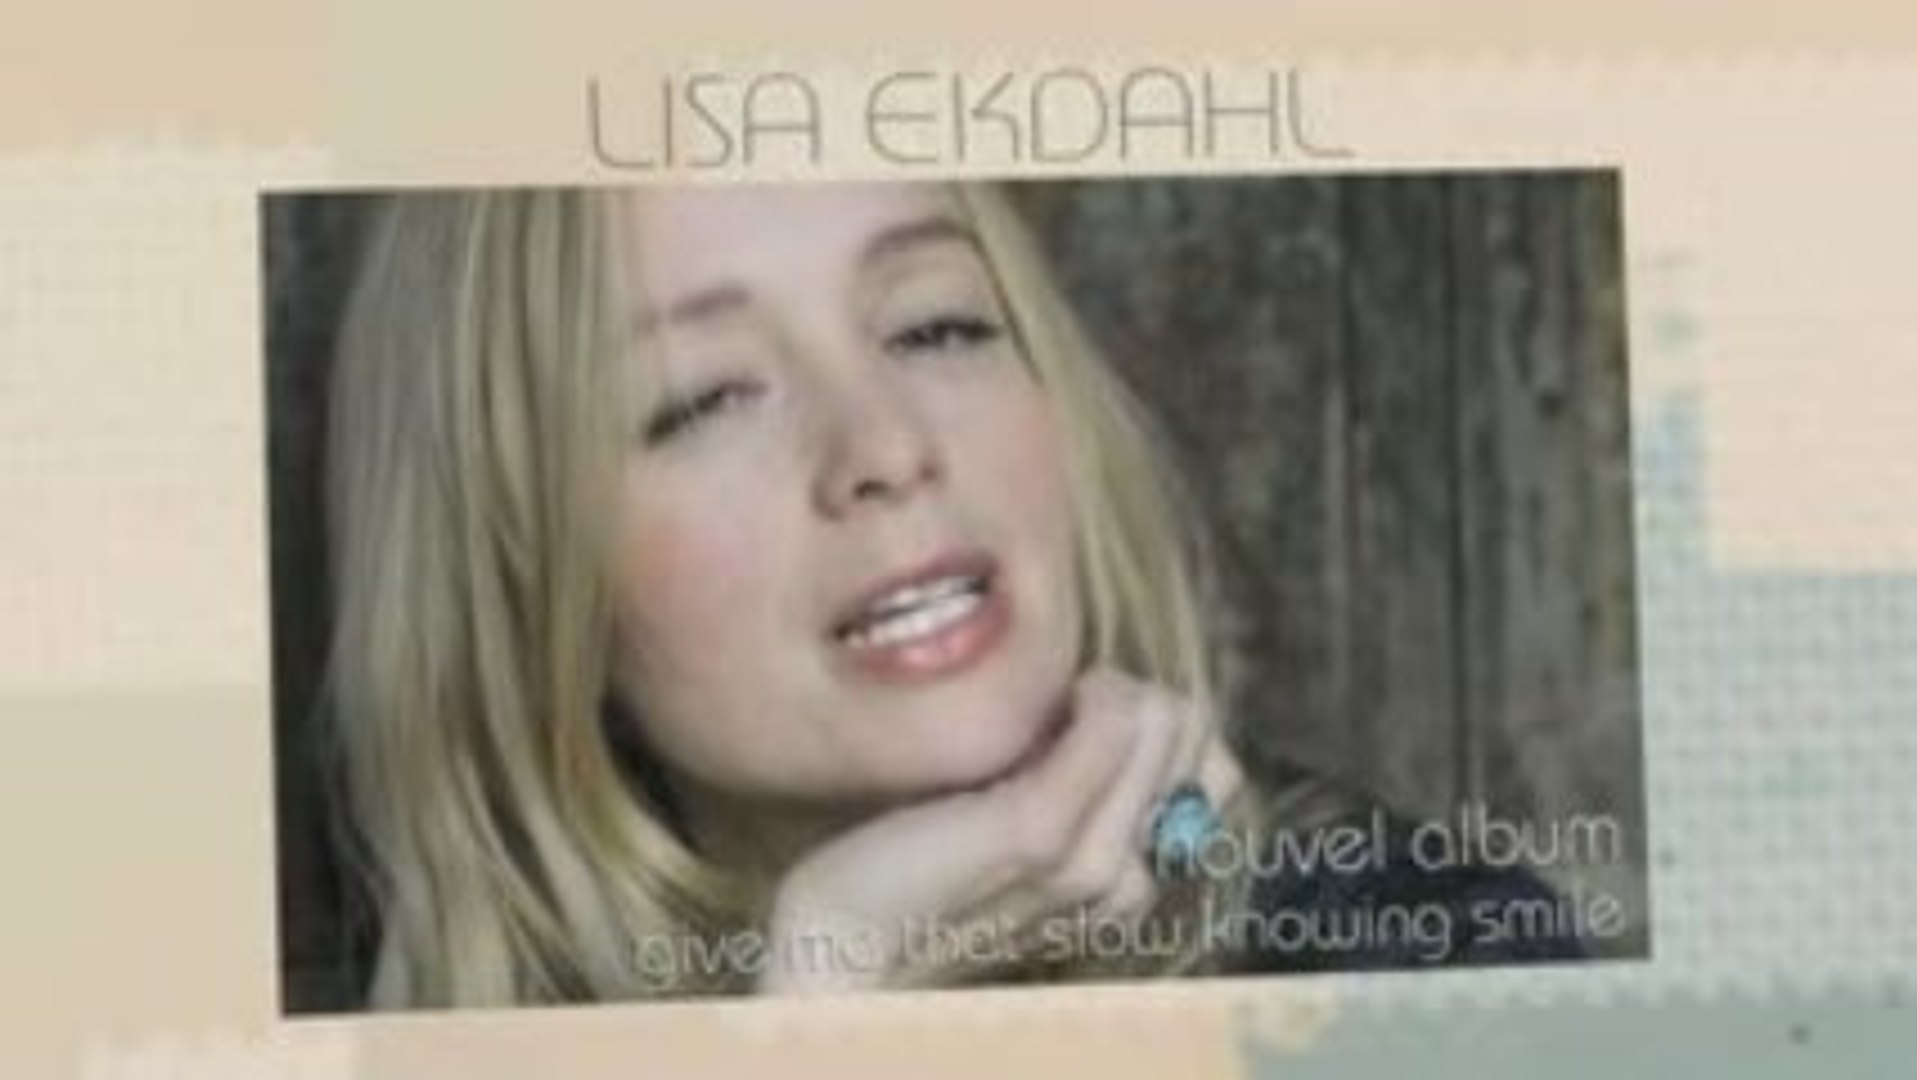 Spot Lisa Ekdahl, Give Me That Slow Knowing Smile - Vidéo dailymotion